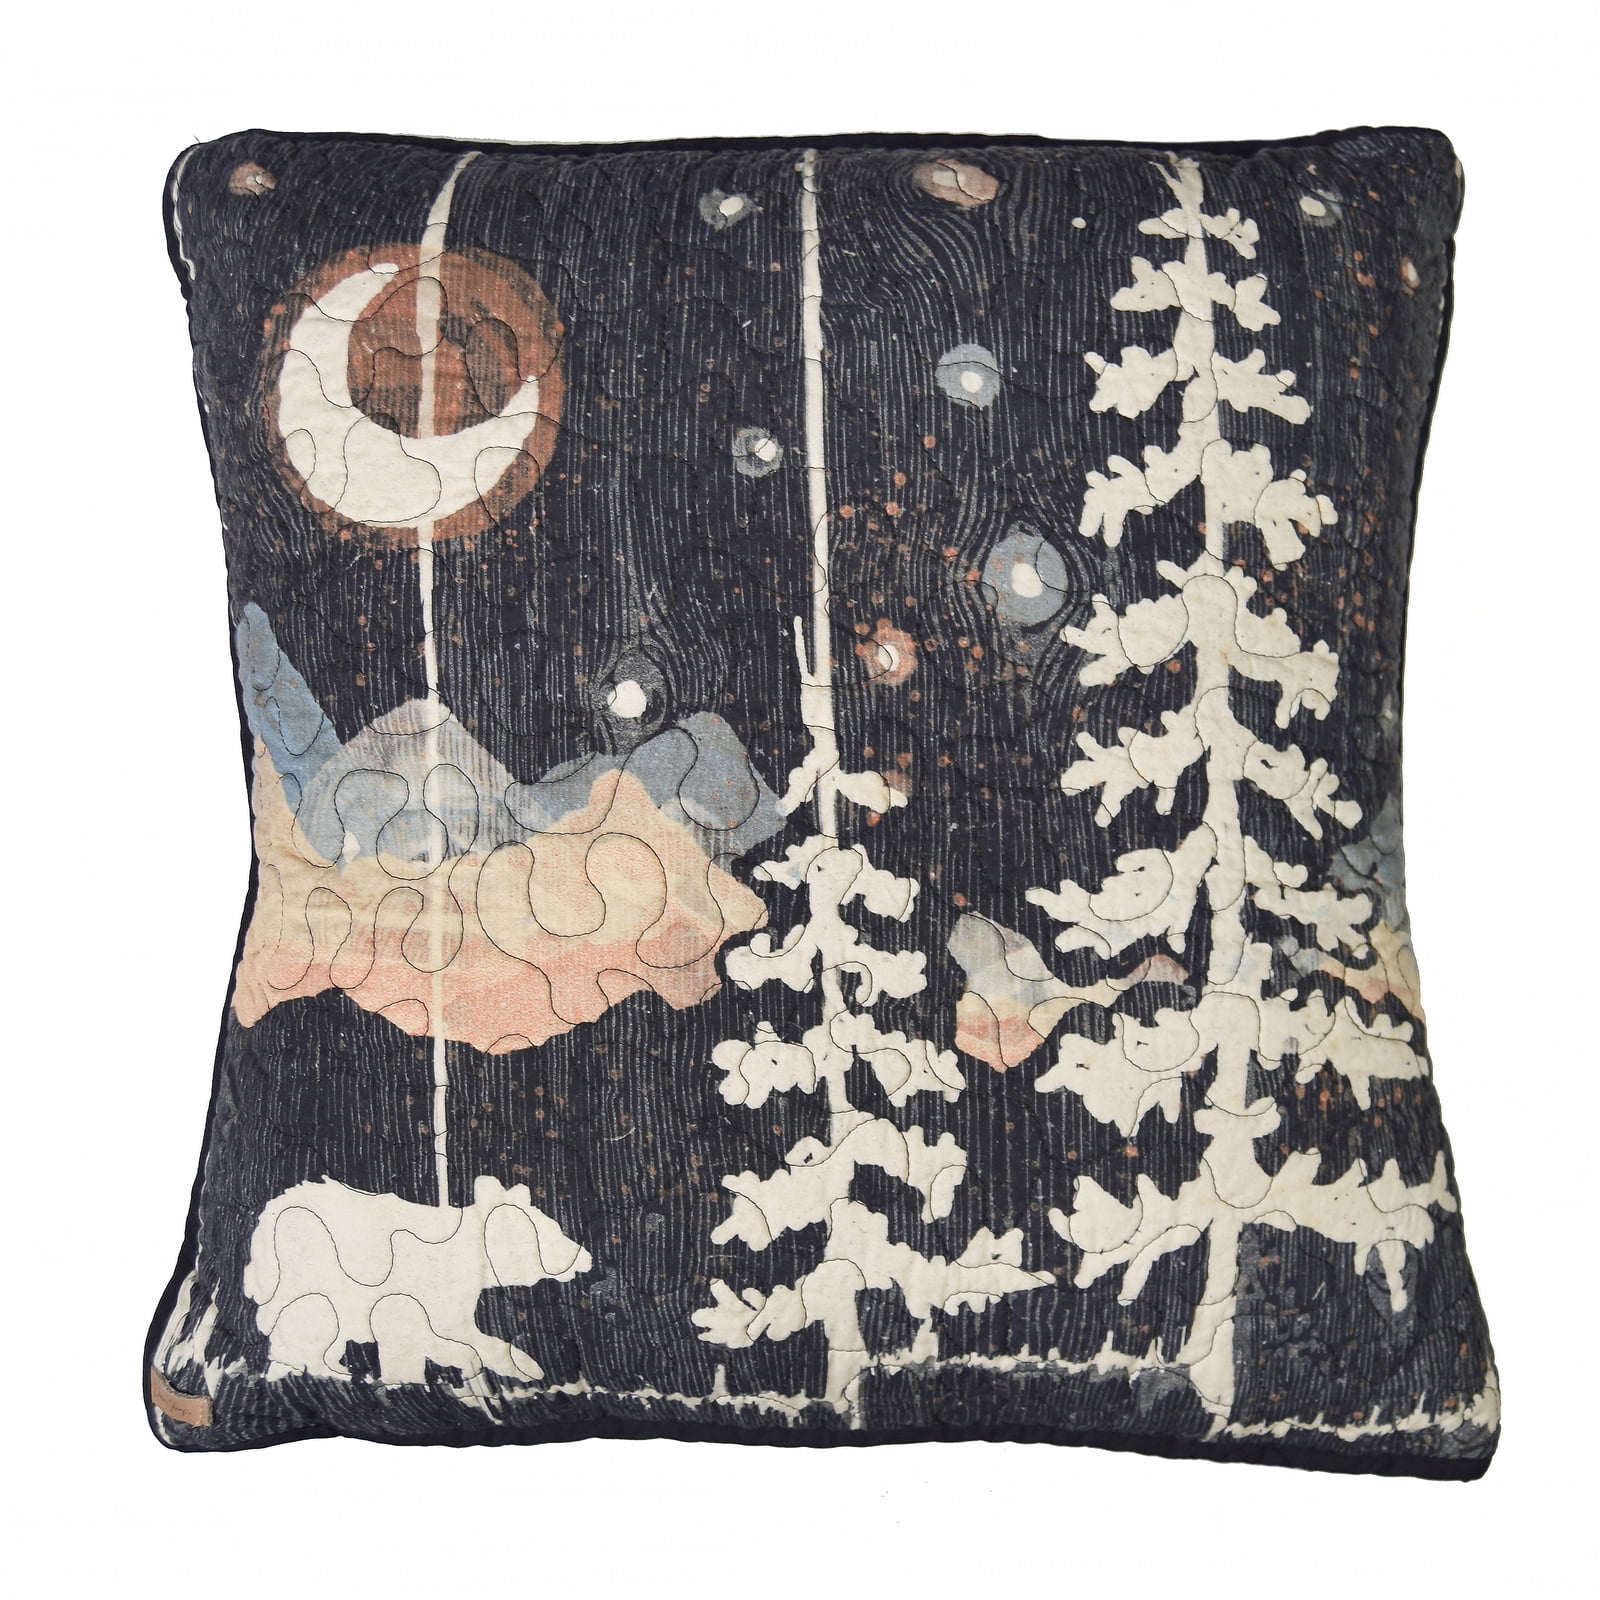 61101 18 X 18 In. Moonlit Bear Decorative Pillow, Multi Color